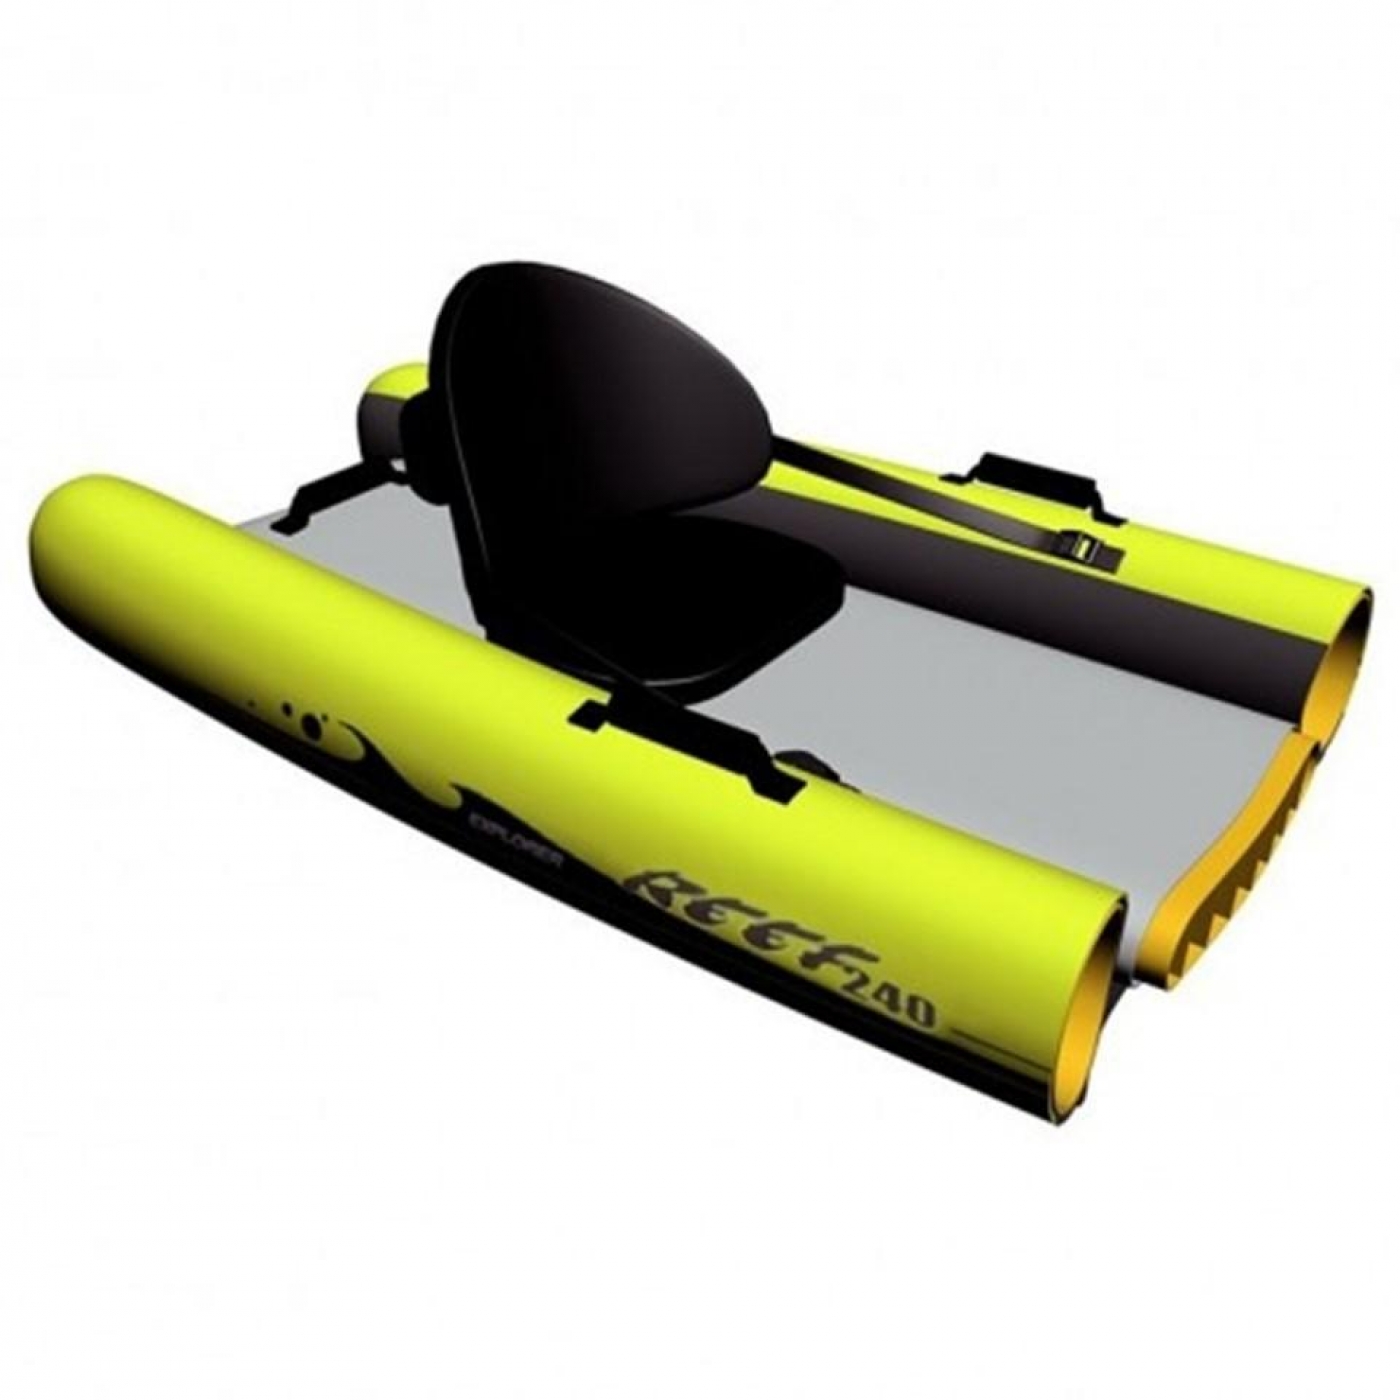 Kayak Hinchable Sevylor Reef 300 - Sin Color - Kayak 2 plazas